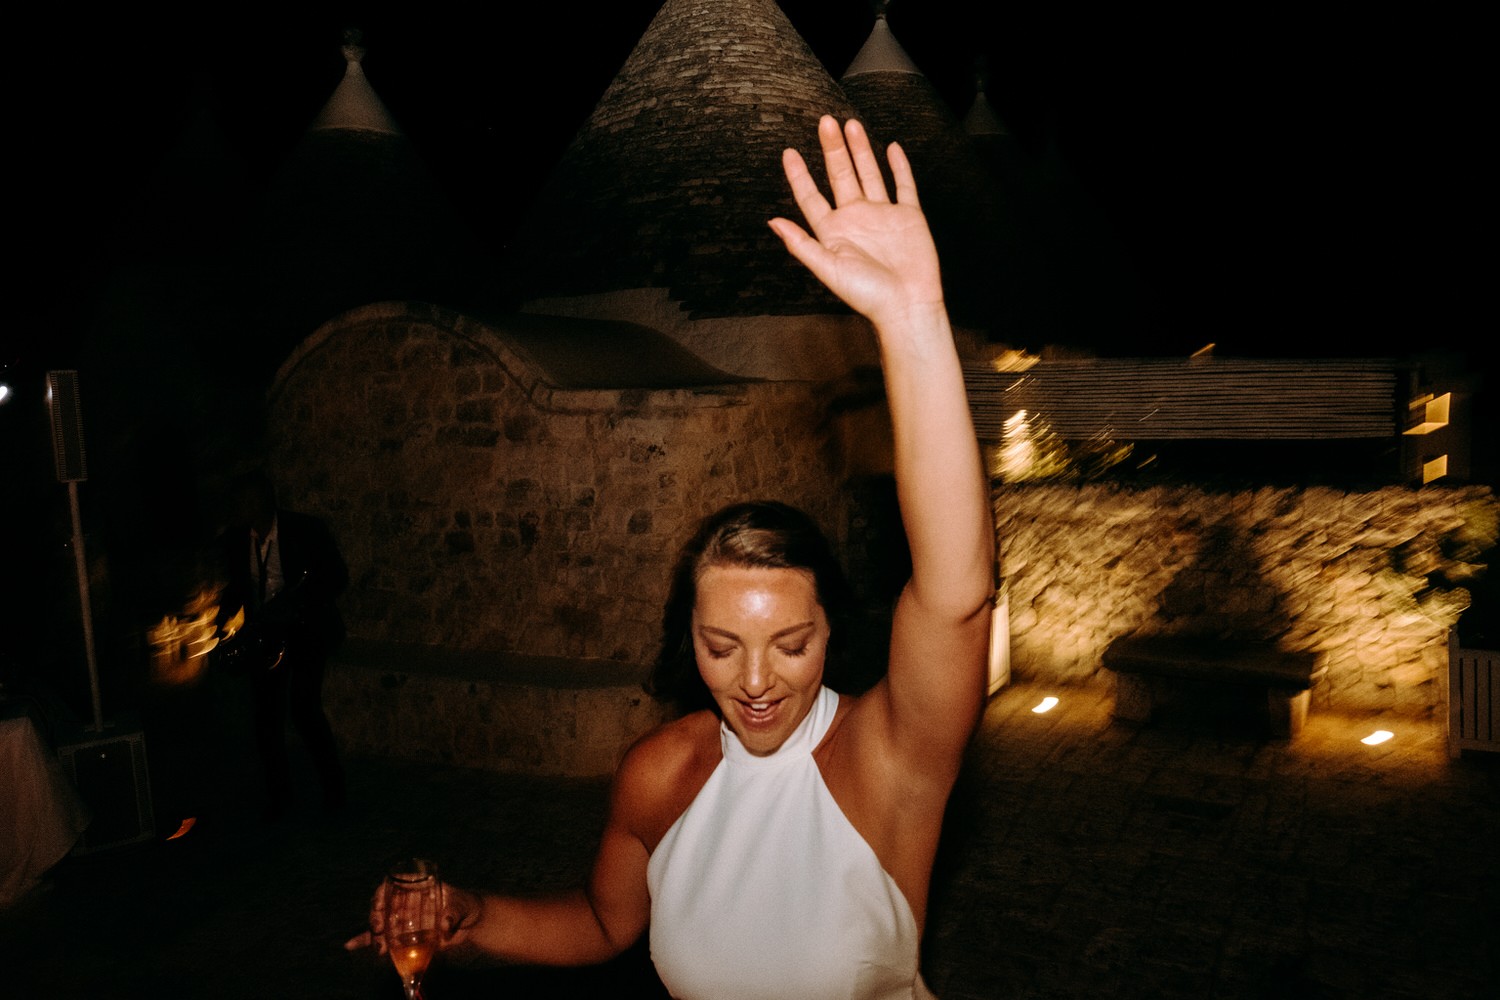 Party - Wedding in Apulia, Italy - 35mm